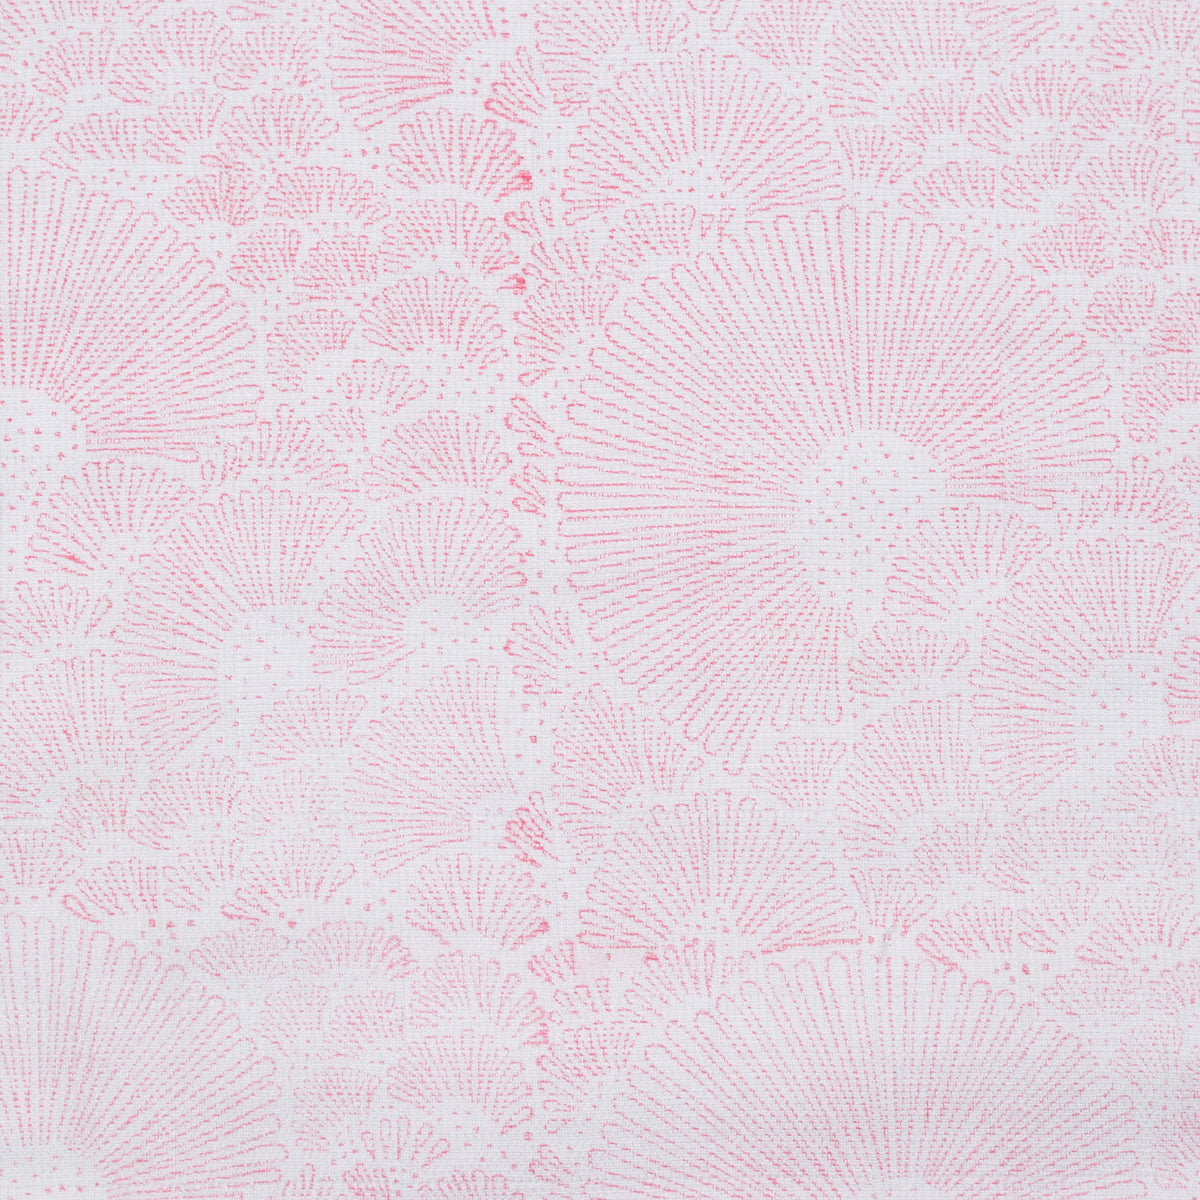 Handblocked organic burp cloth - signature pink